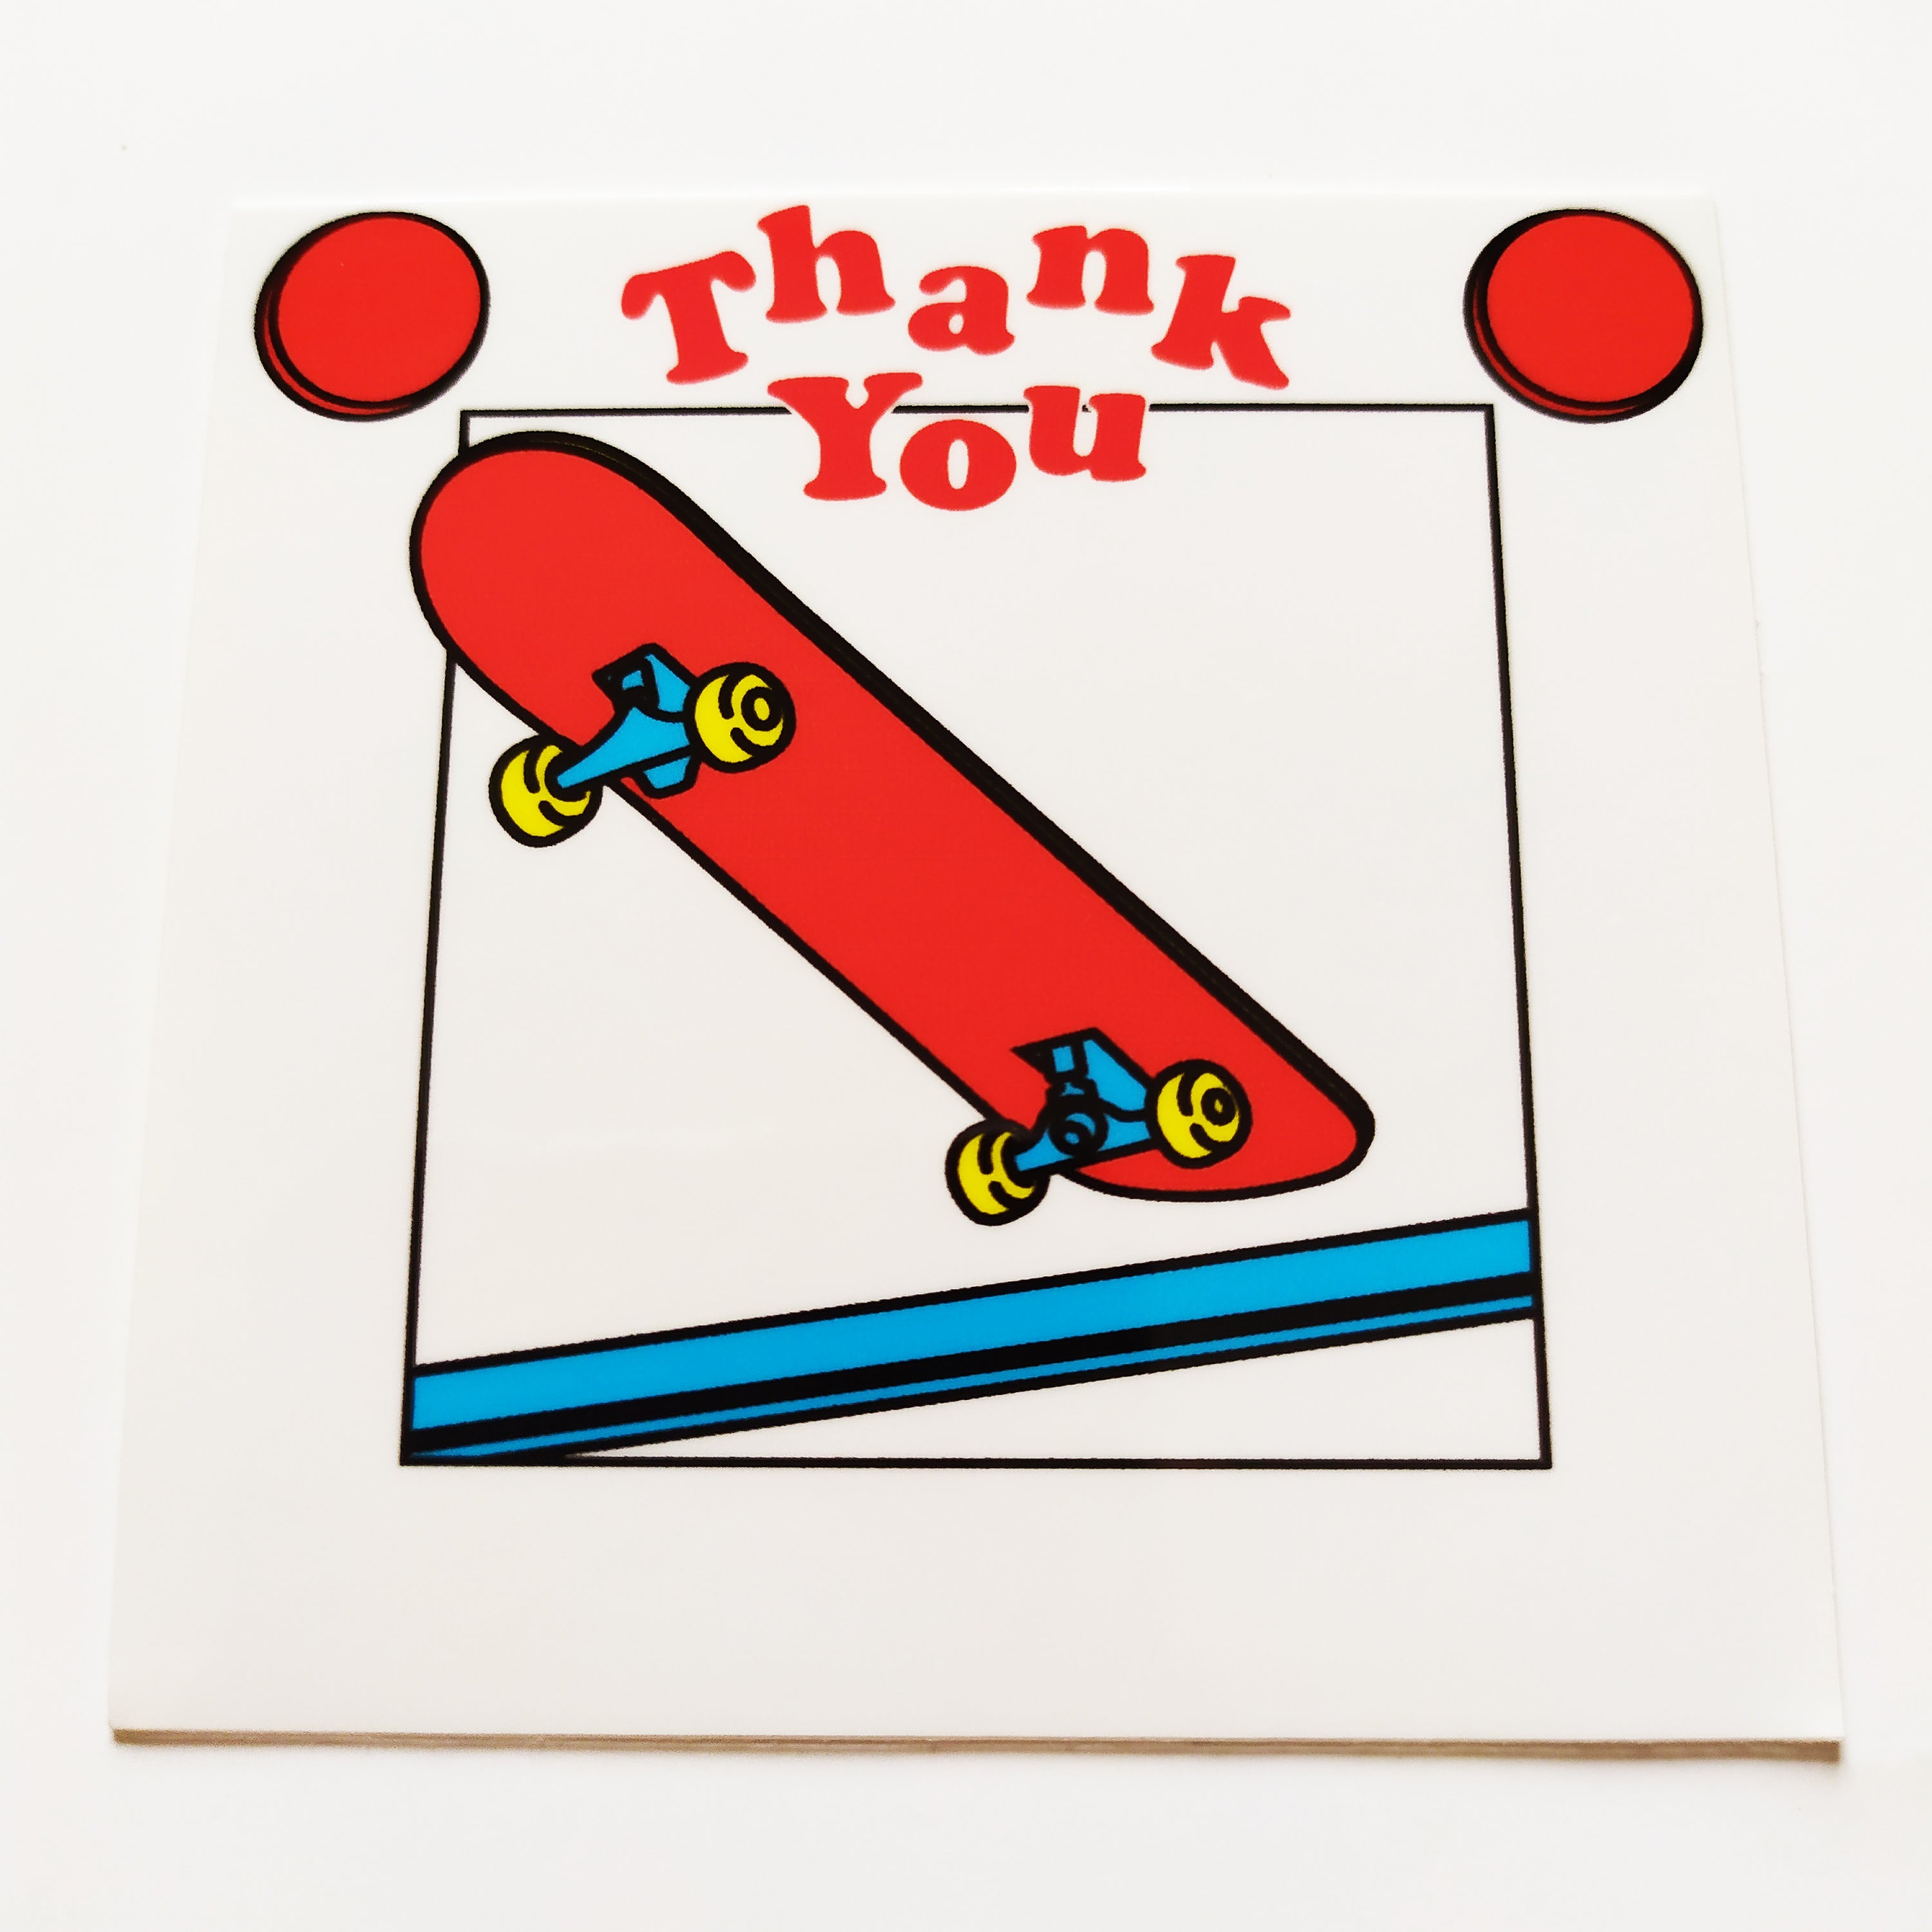 Thank You Skateboard Sticker - 7cm across approx - SkateboardStickers.com